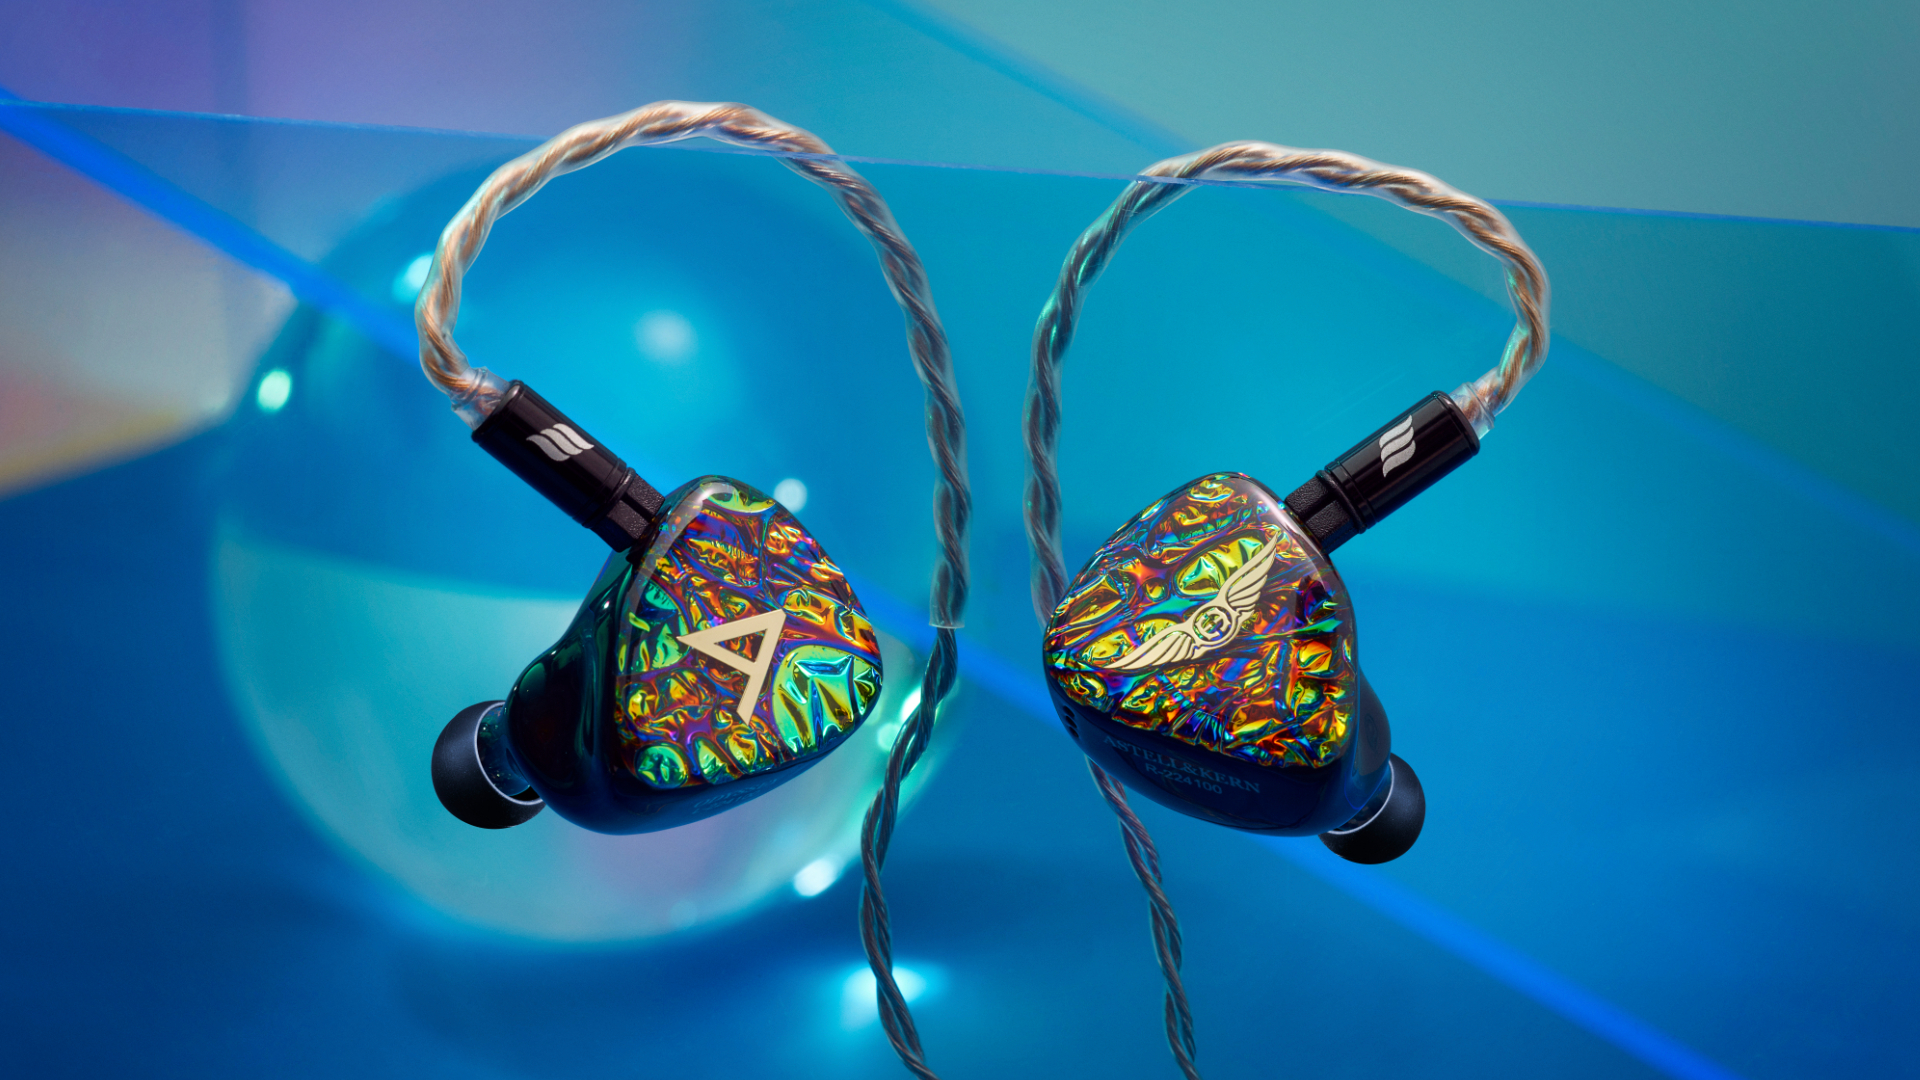 Astell & Kern x Empire Ears Odyssey IEMs on blue background